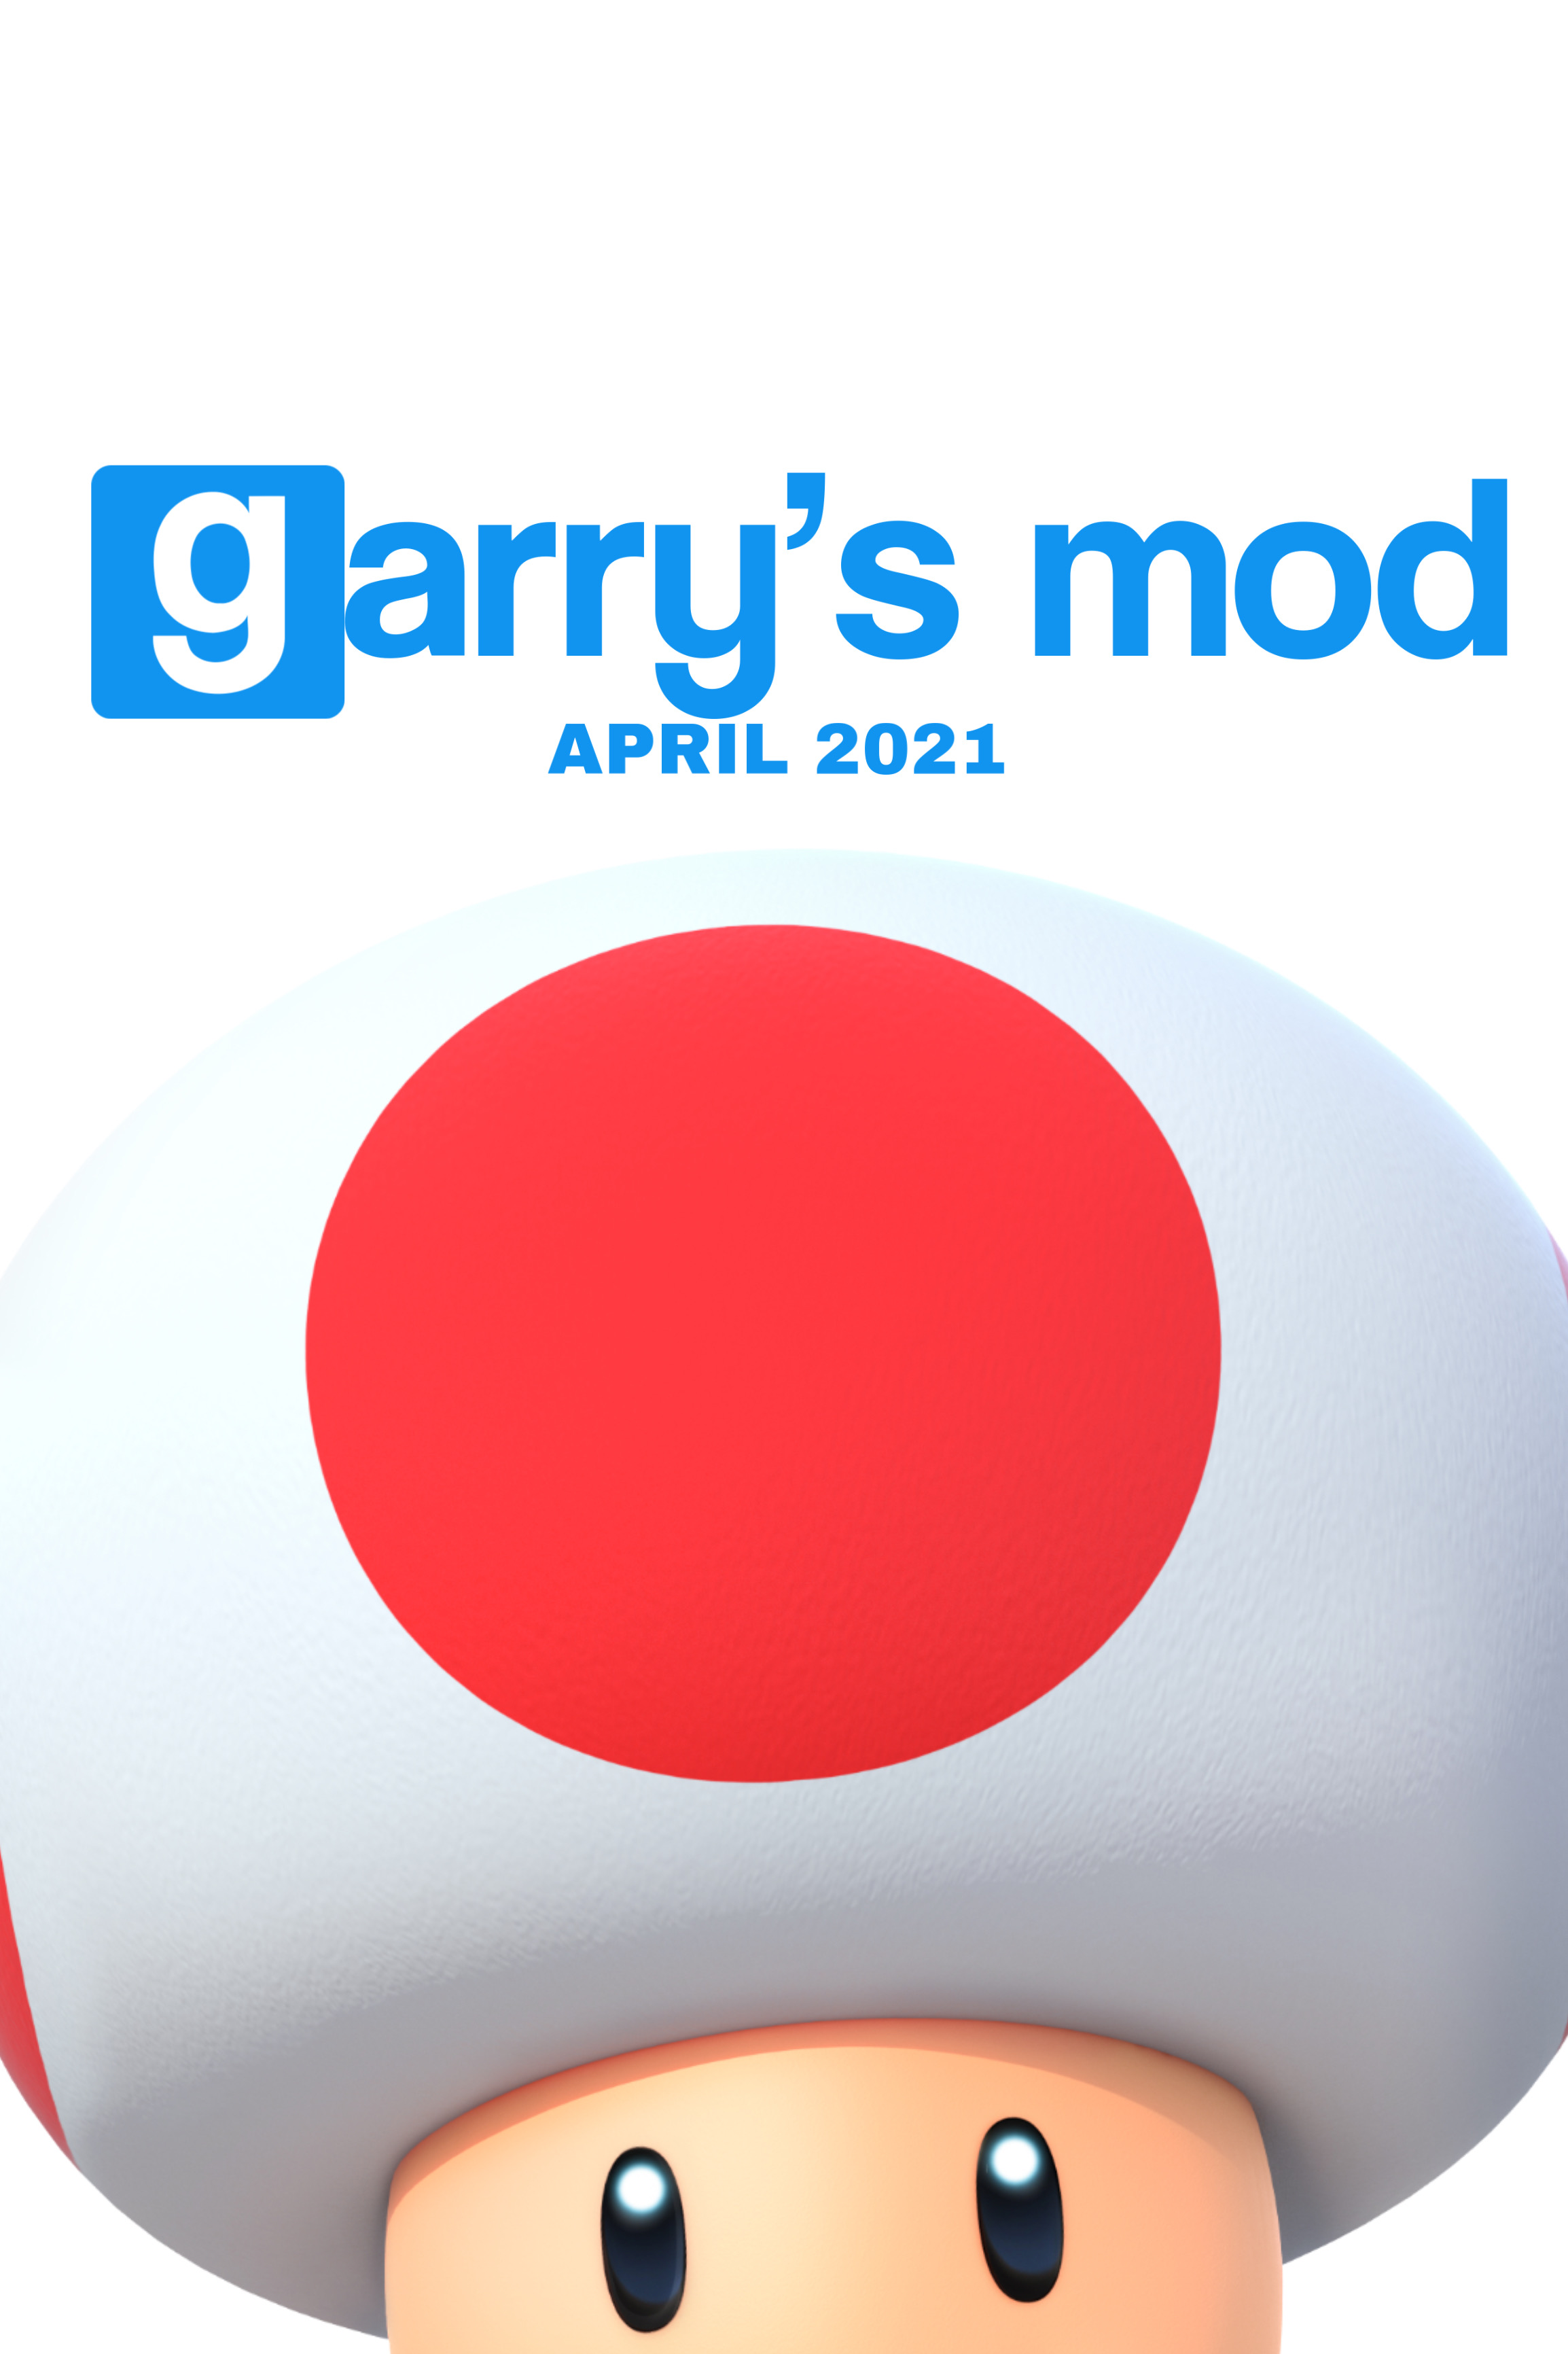 Garry's Mod [Articles] - IGN